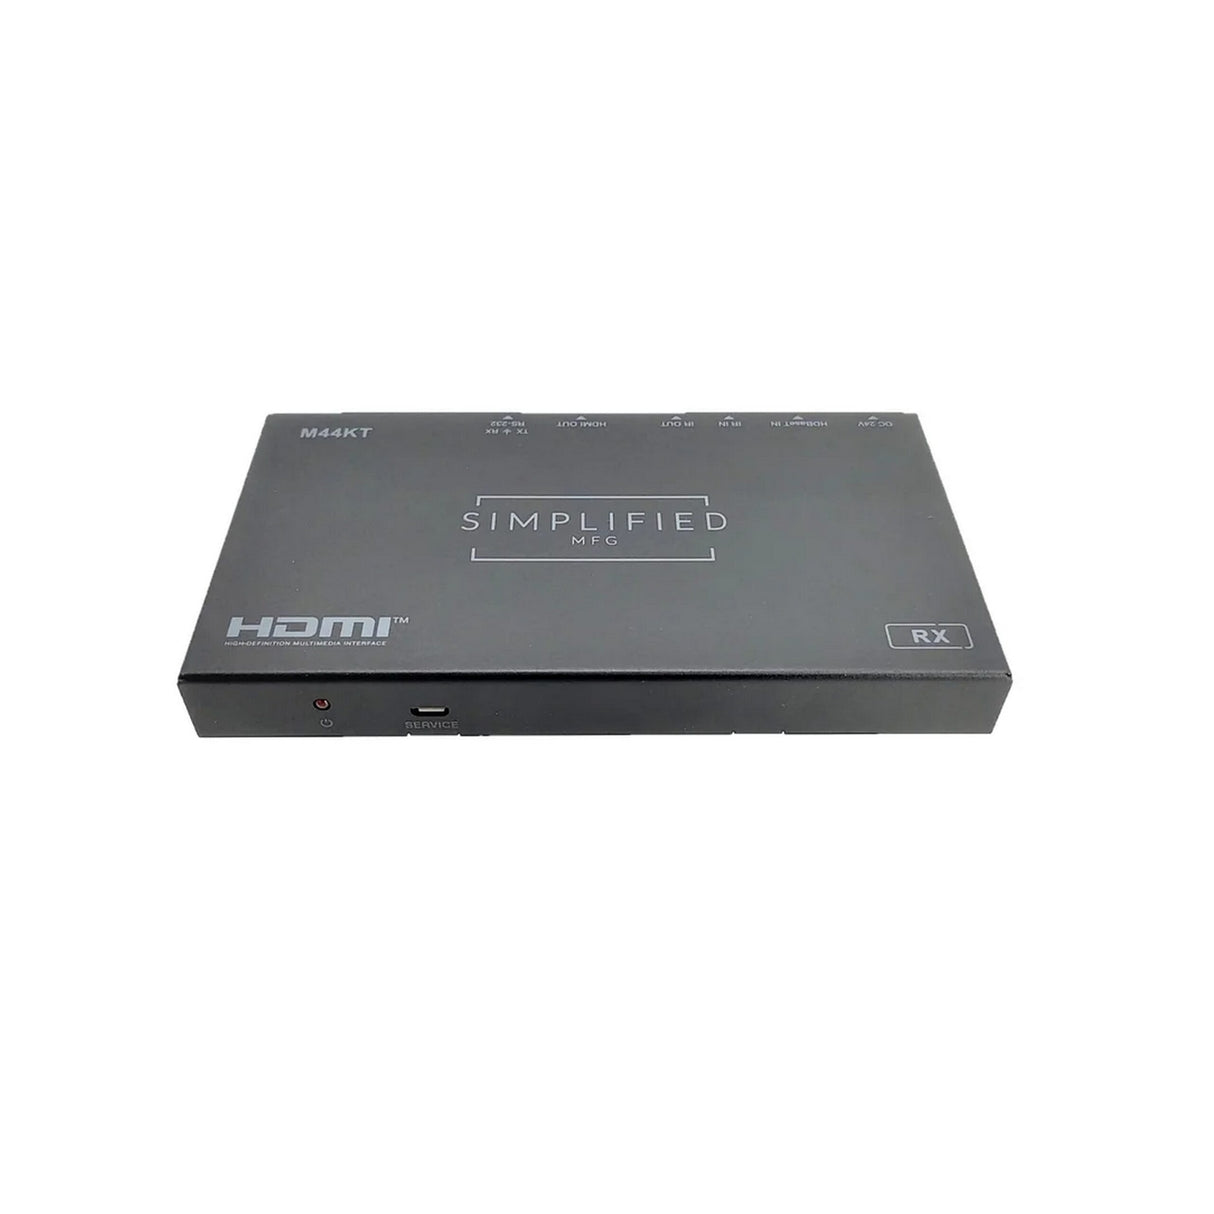 Simplified MFG M44KT Scaling HDBaseT 4 x 4 HDMI Matrix Kit